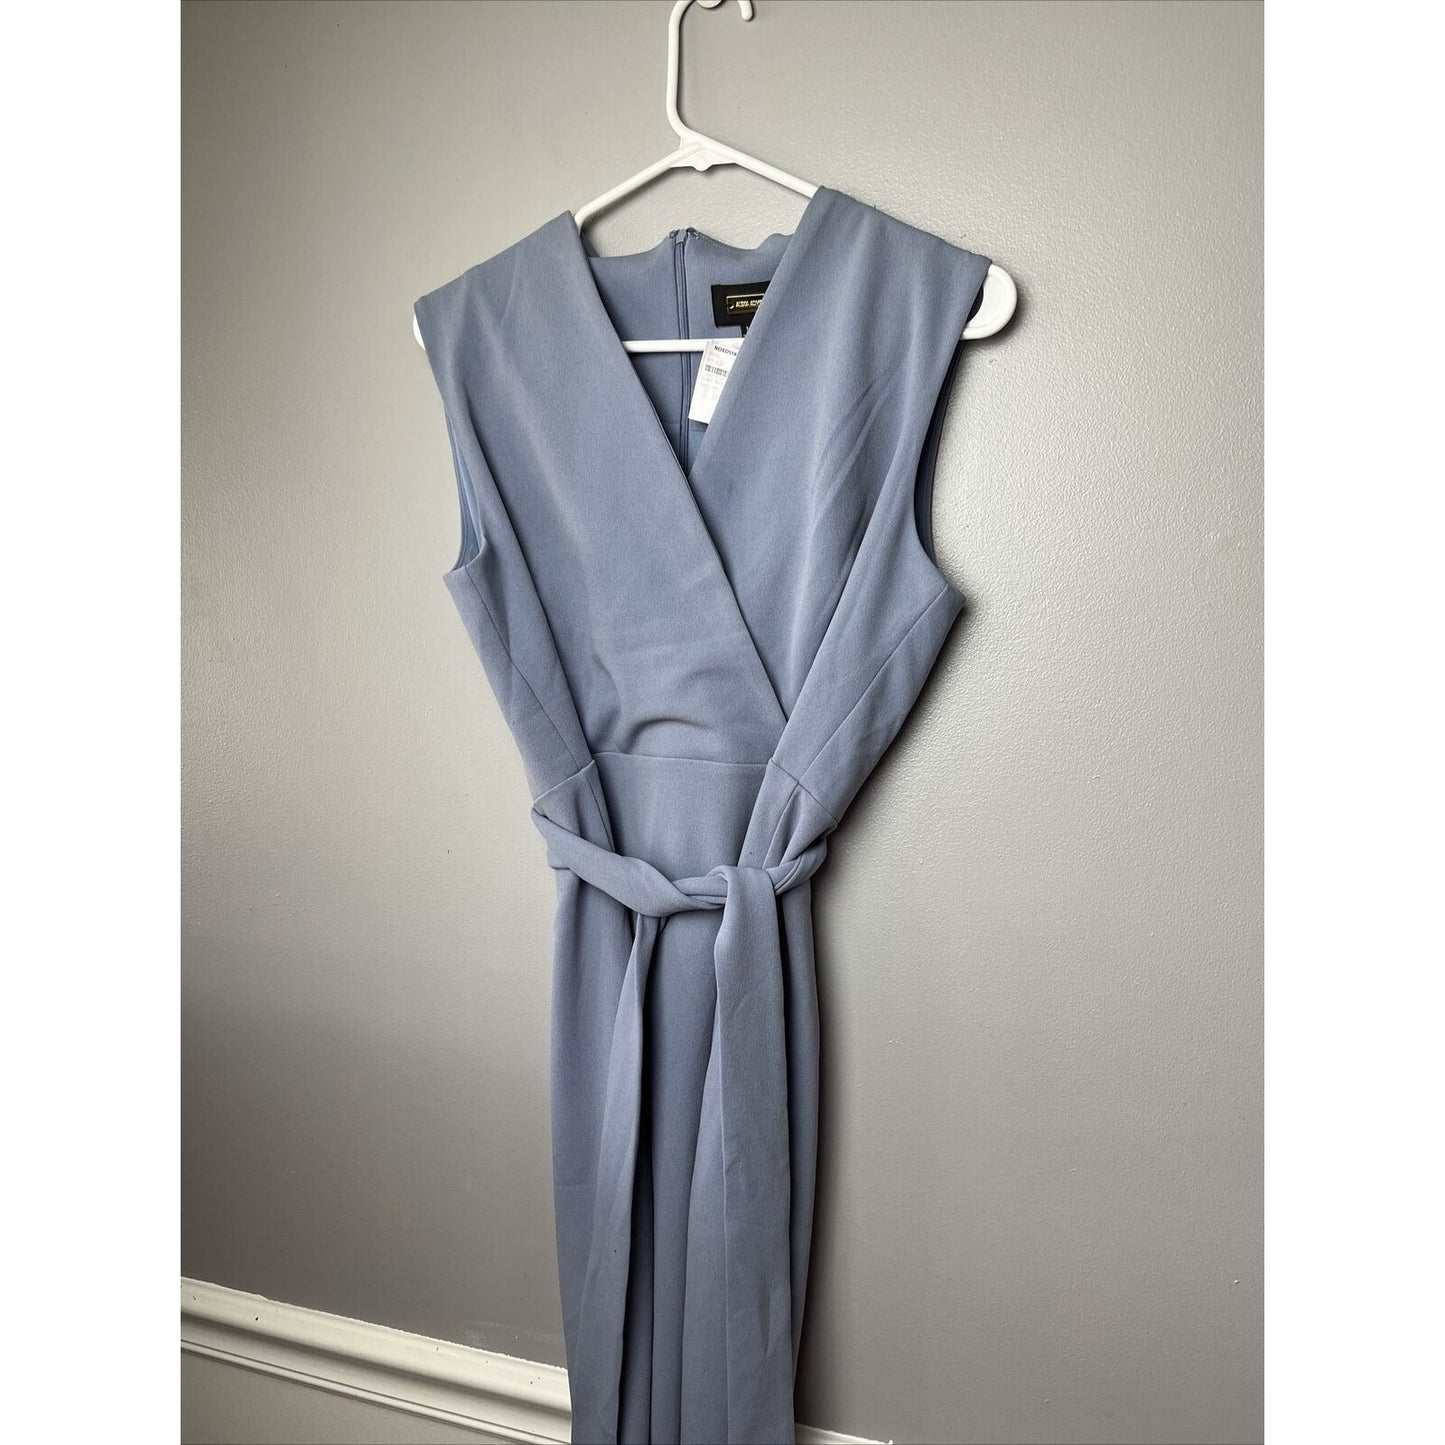 Alexia Admor Women's Dress M Blue Savannah Wrap Sheath Medium NEW